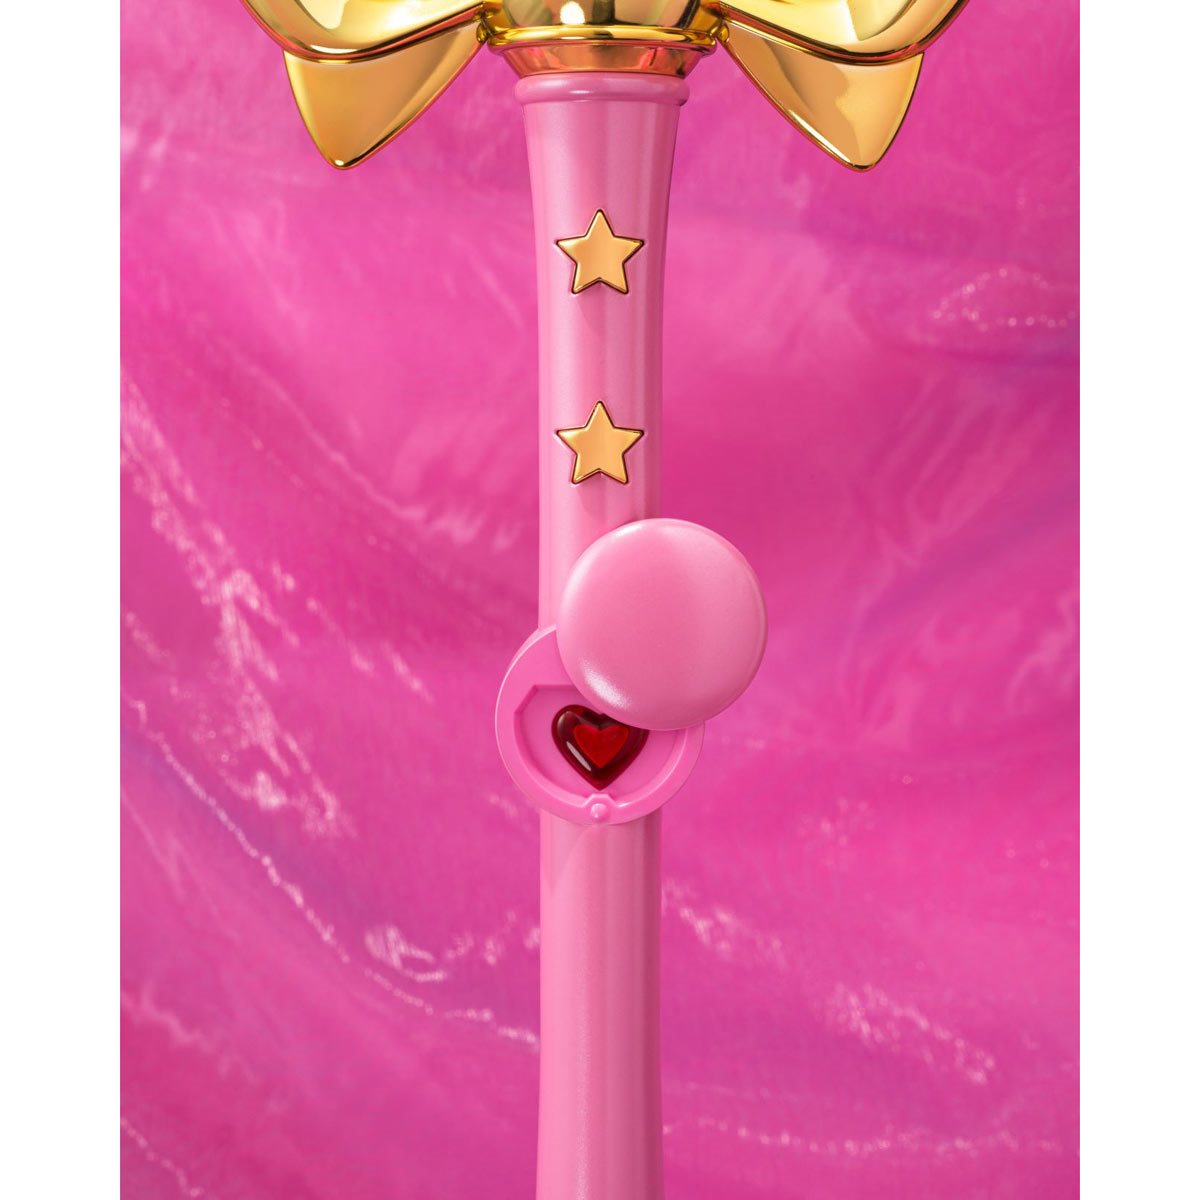 Bandai Tamashii Nations Proplica: Pretty Guardian Sailor Moon - Spiral Heart Moon Rod Brilliant Color Replica